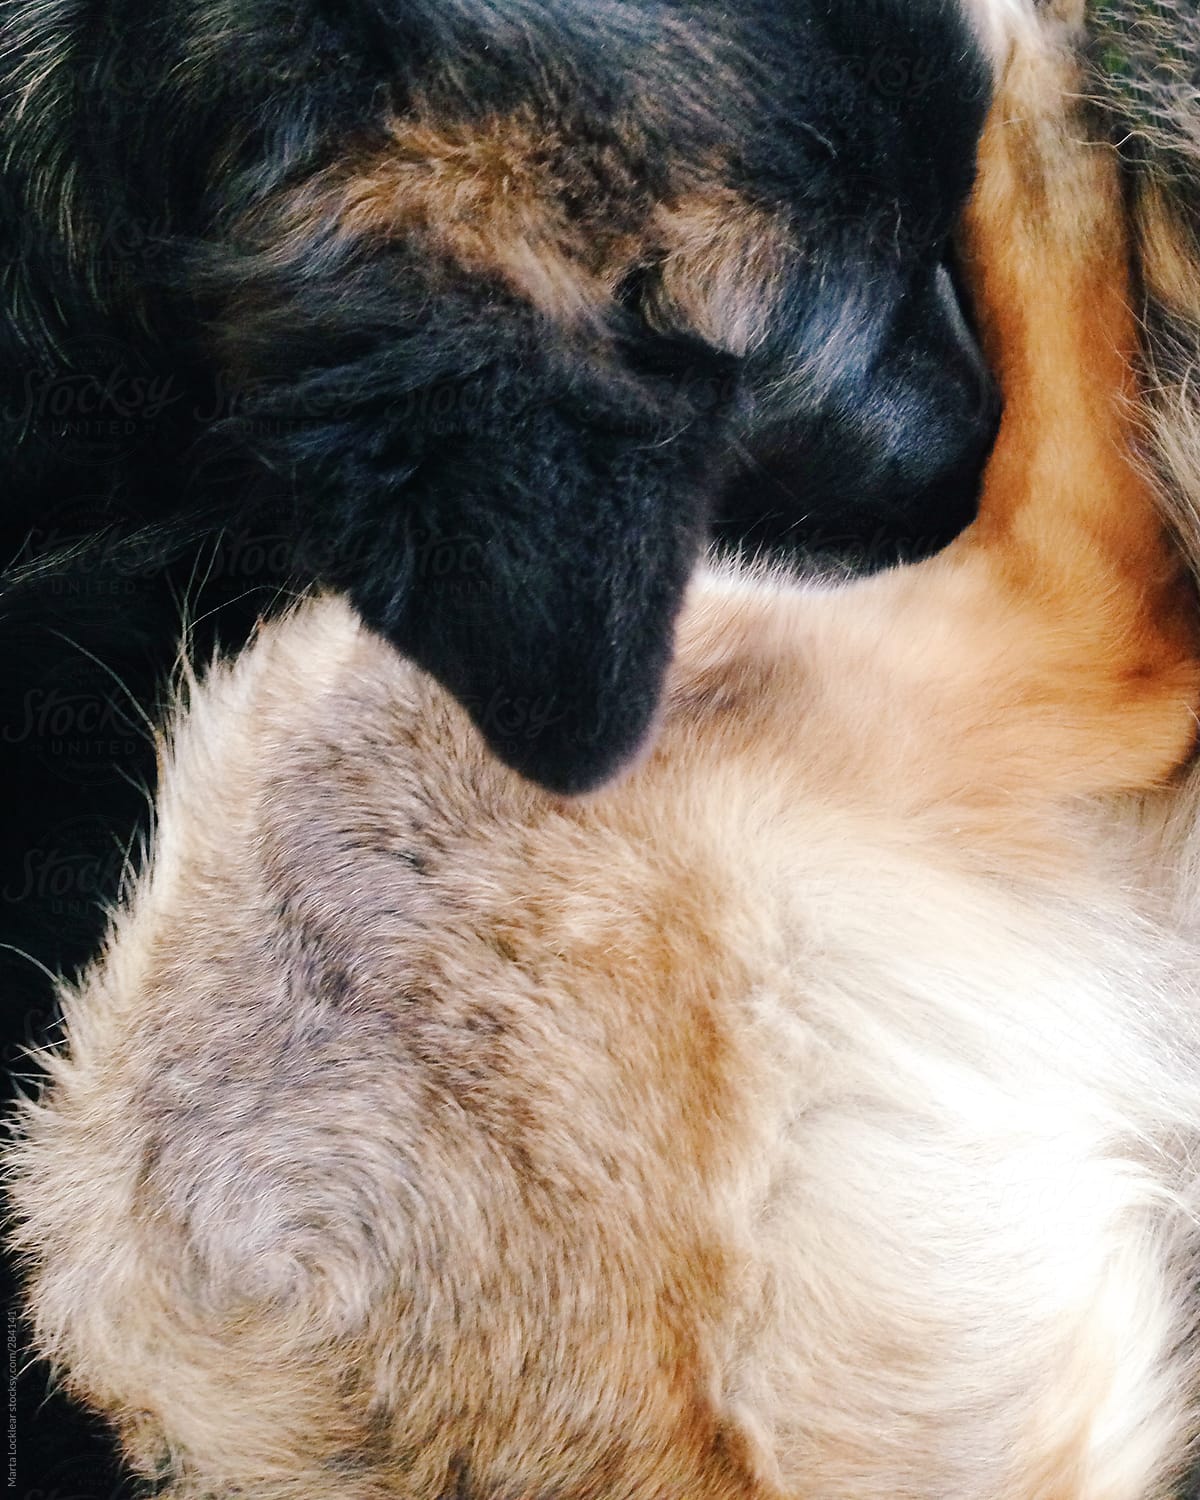 Close up of a German Shepheard dog curled up sleeping